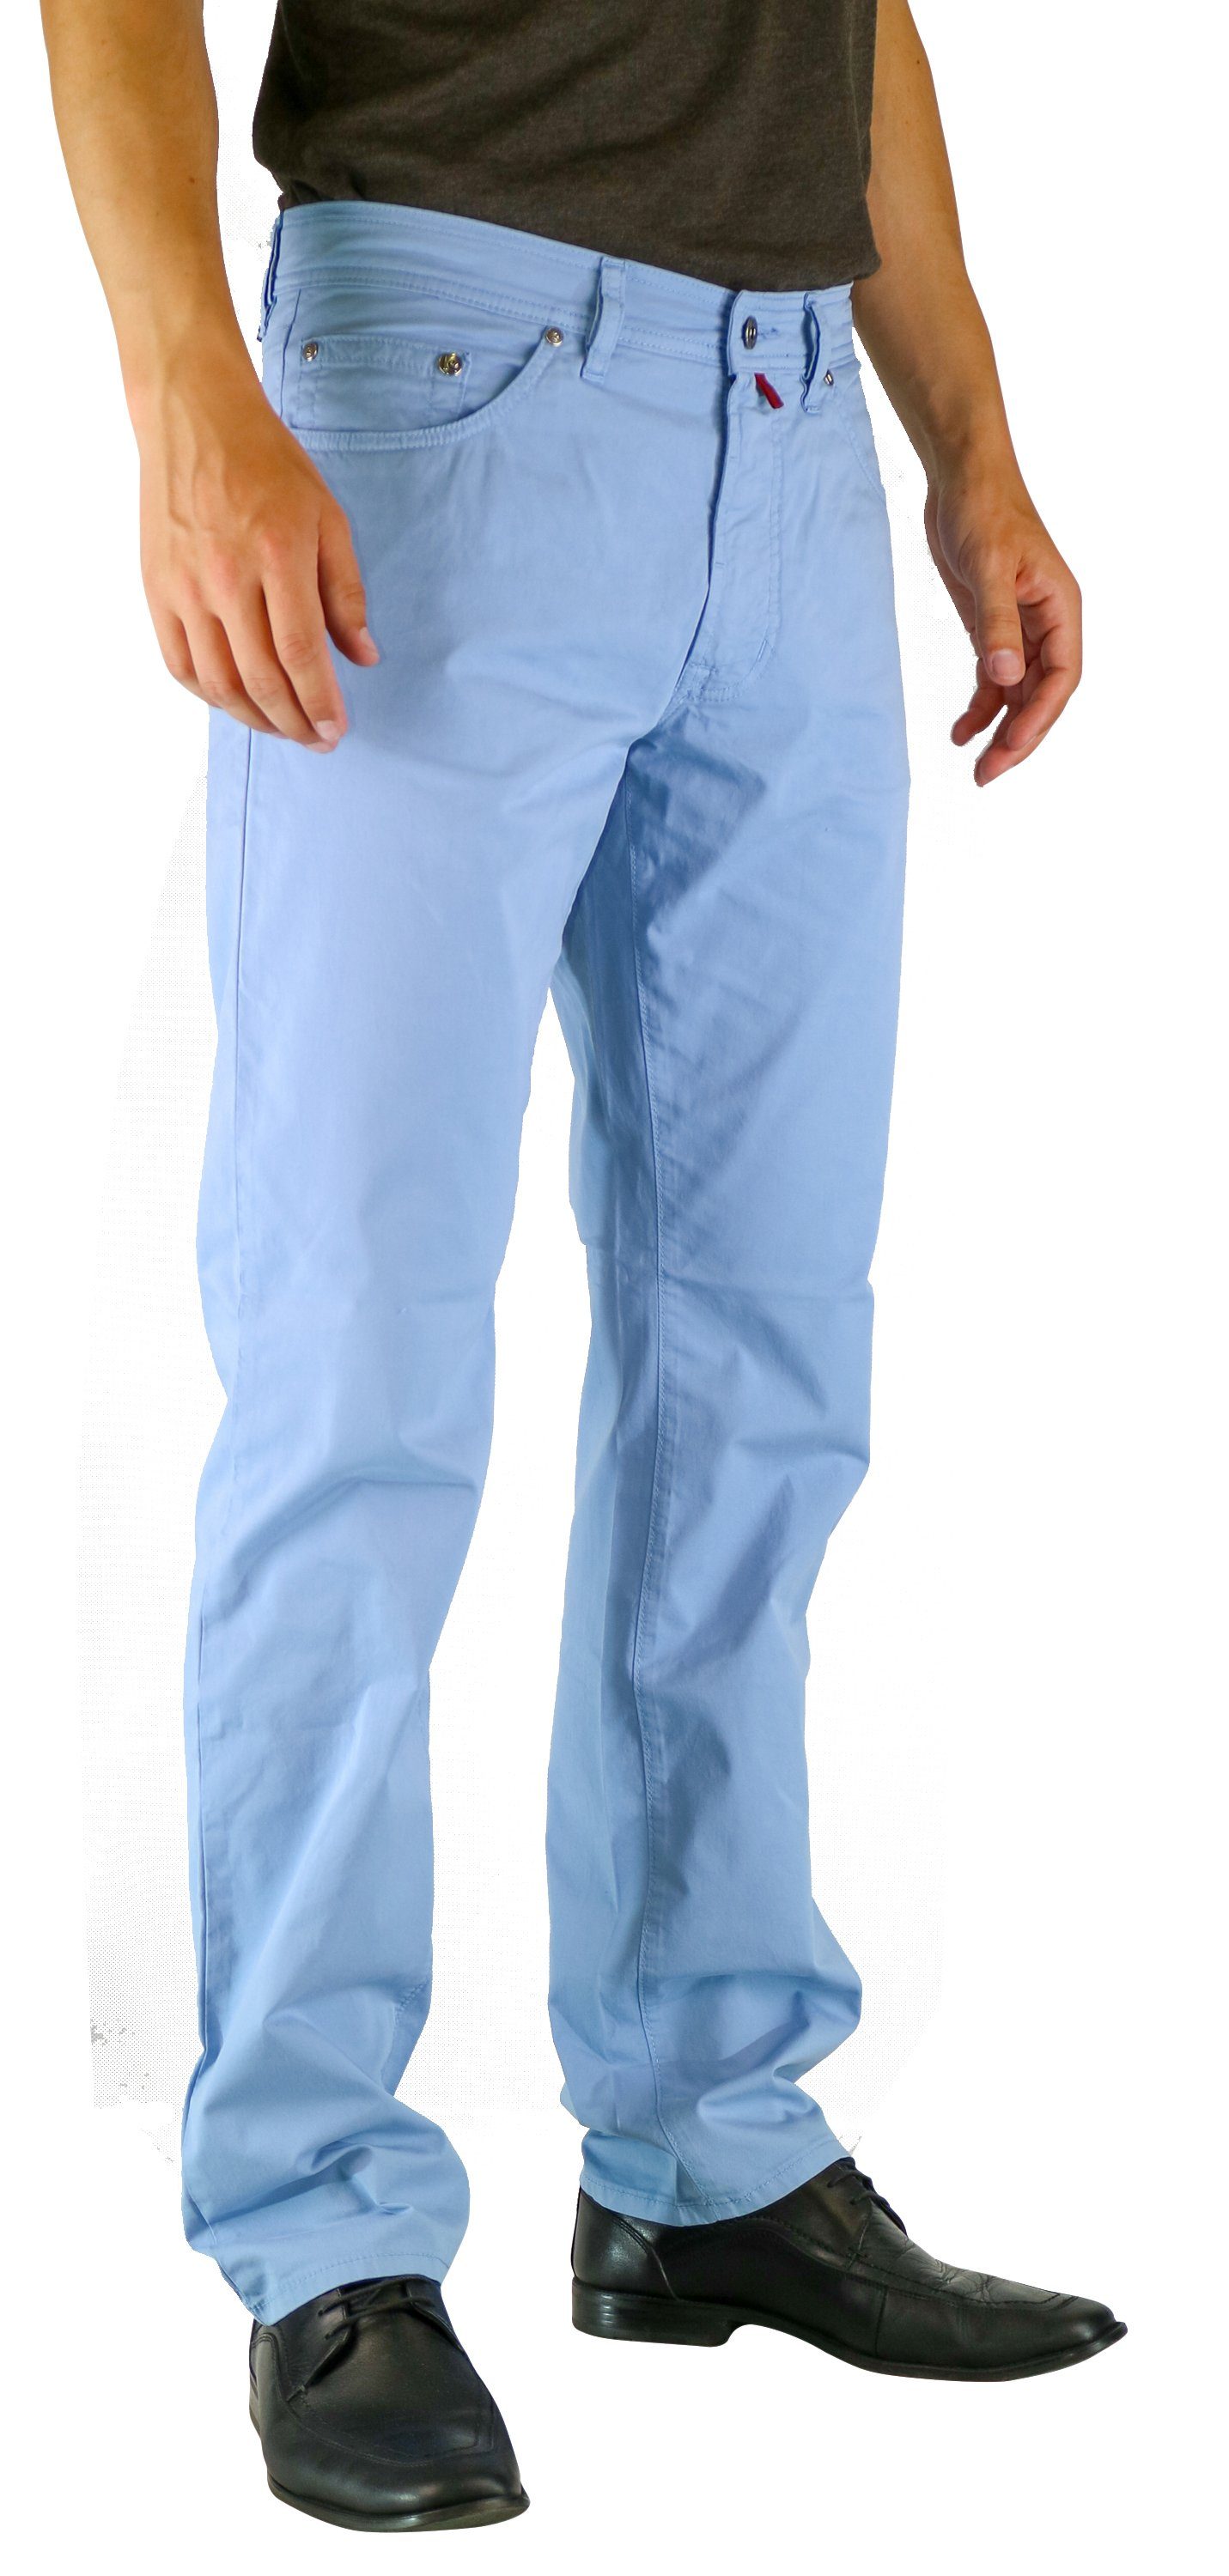 Pierre Cardin 5-Pocket-Jeans PIERRE CARDIN 2021.65 DEAUVILLE summer blue 3196 air touch